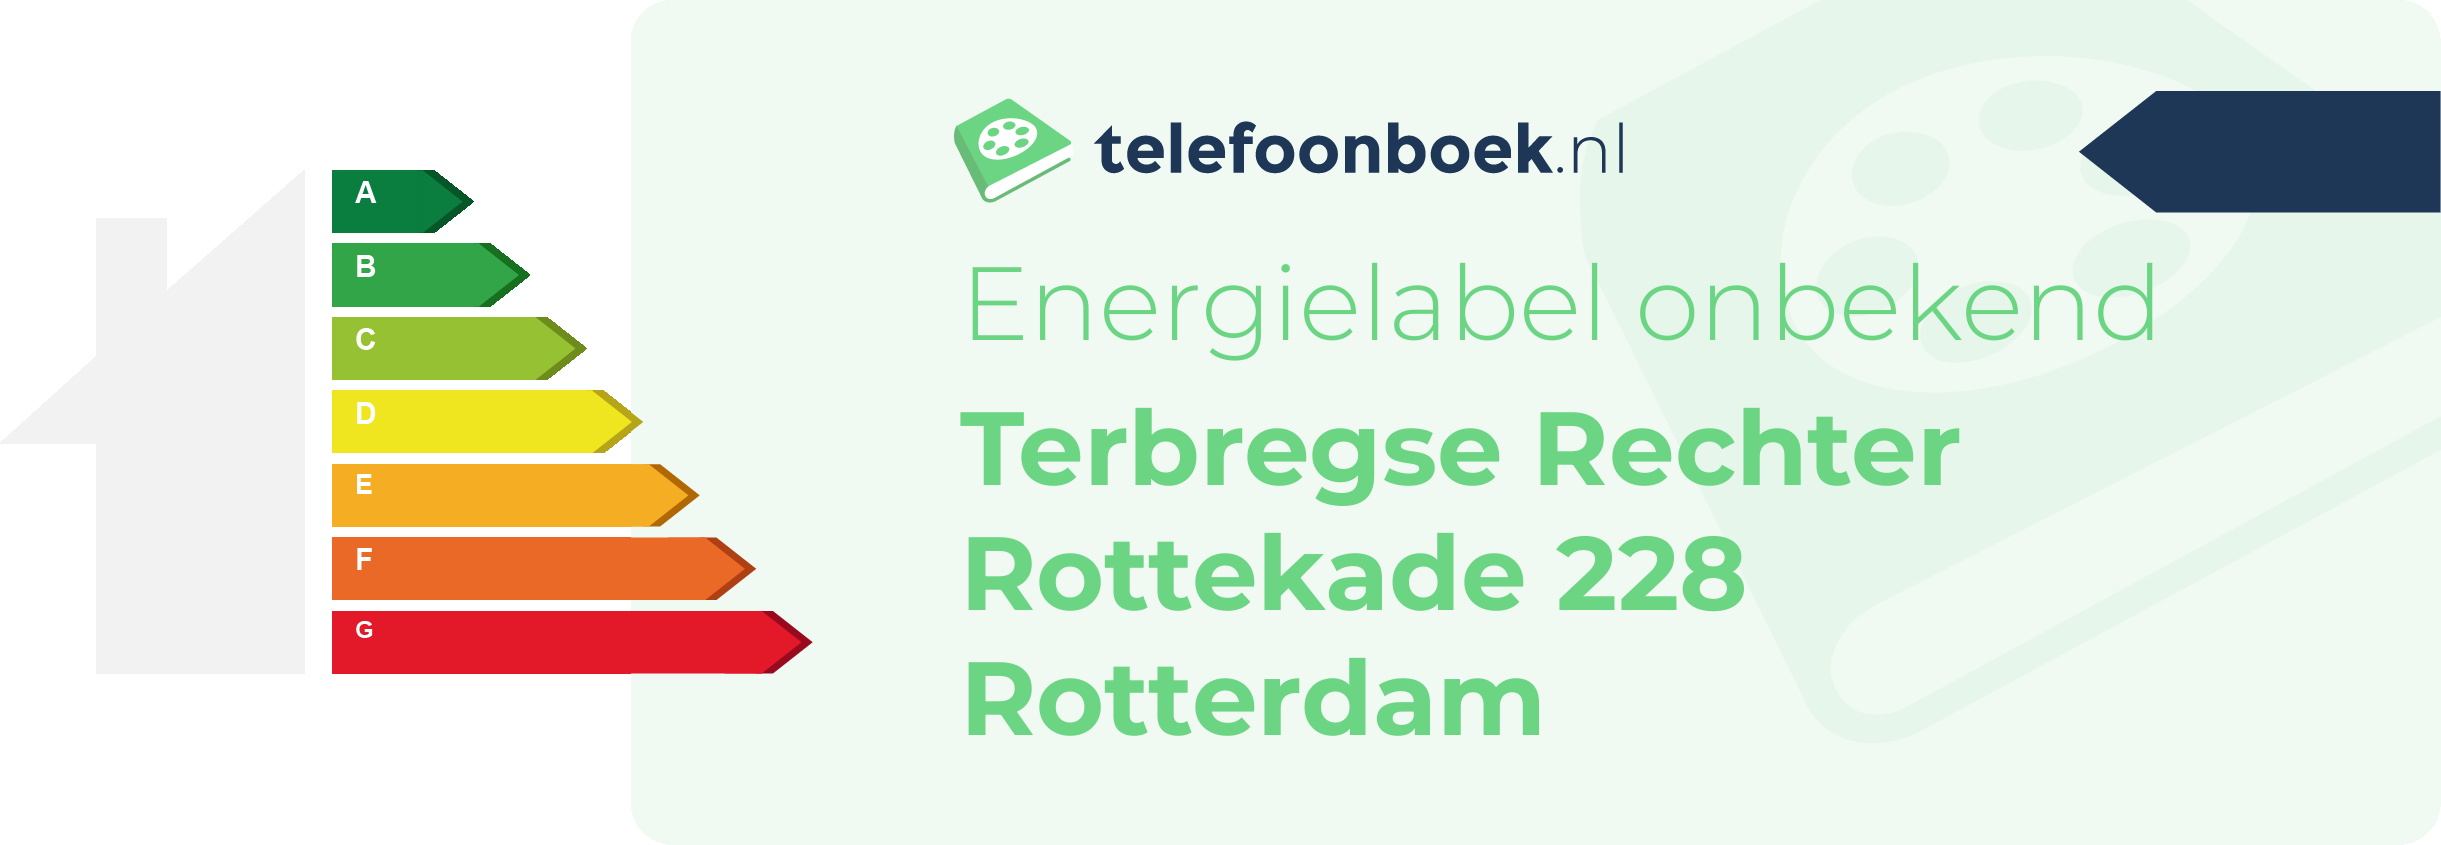 Energielabel Terbregse Rechter Rottekade 228 Rotterdam